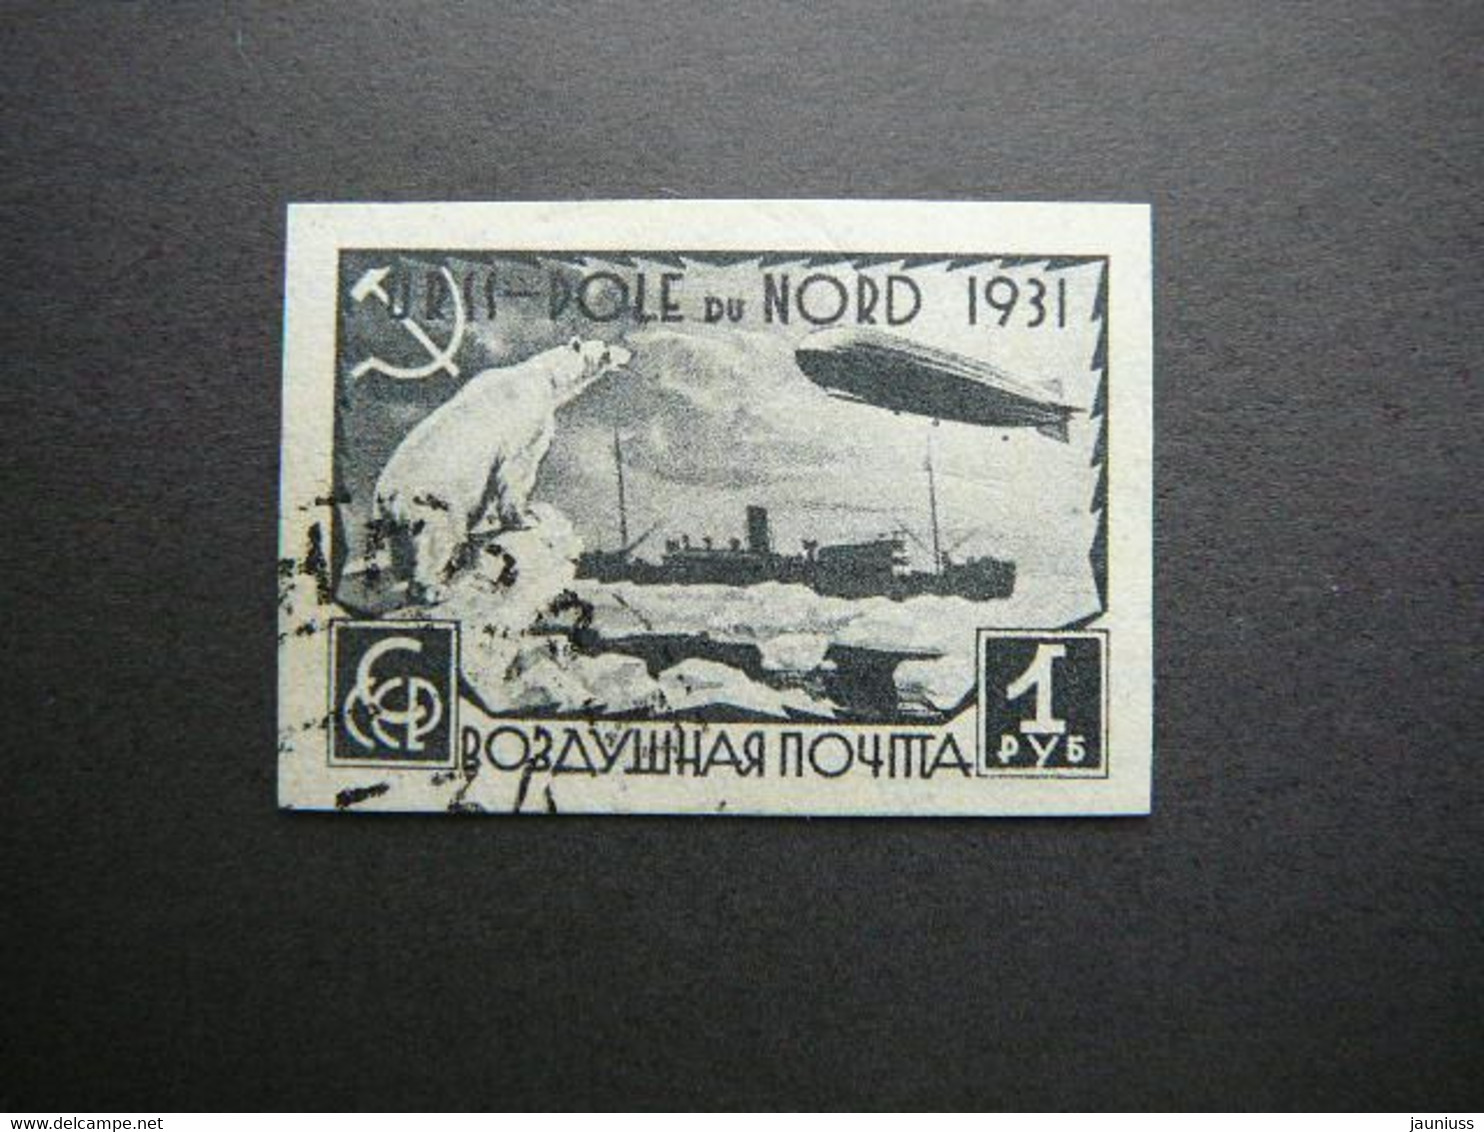 Icebreaker Malygin In Arctic # Russia USSR Sowjetunion # 1931 Used #Mi. 404 B Ships Zeppelin - Usados